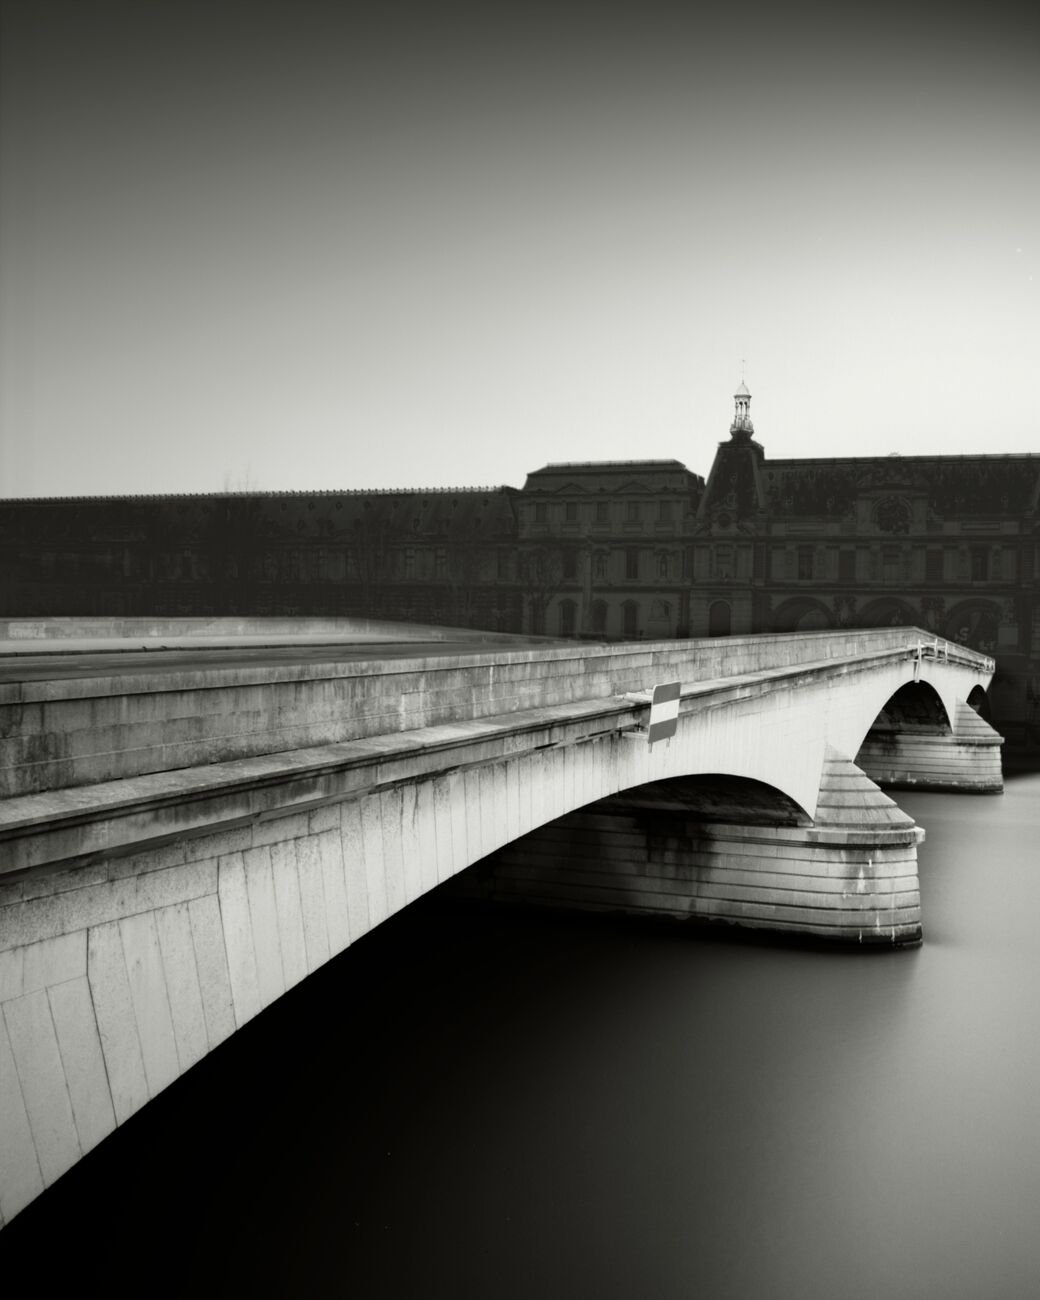 Caroussel Bridge And Louvre, Paris, France. February 2021. Ref-11681 - Denis Olivier Art Photography